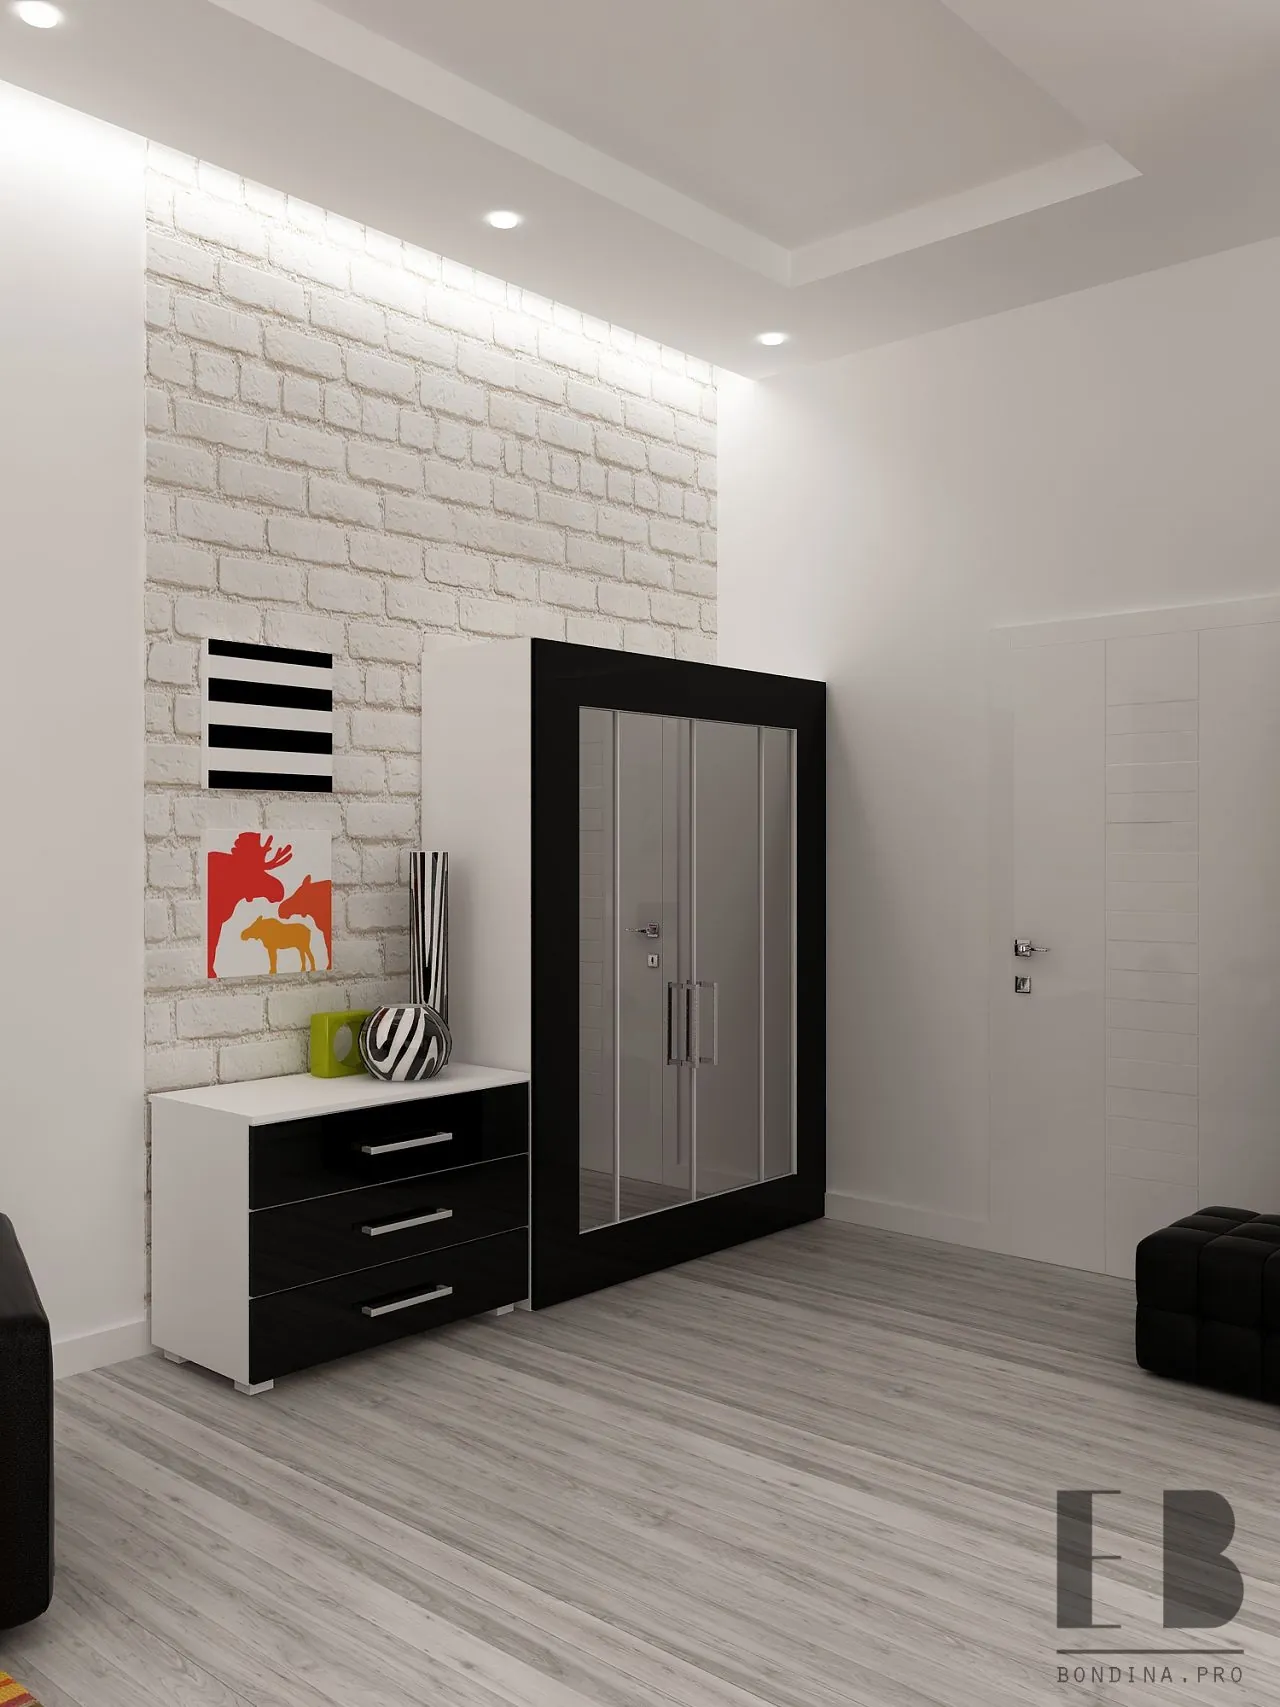 Design of a bedroom-living room with modern furniture